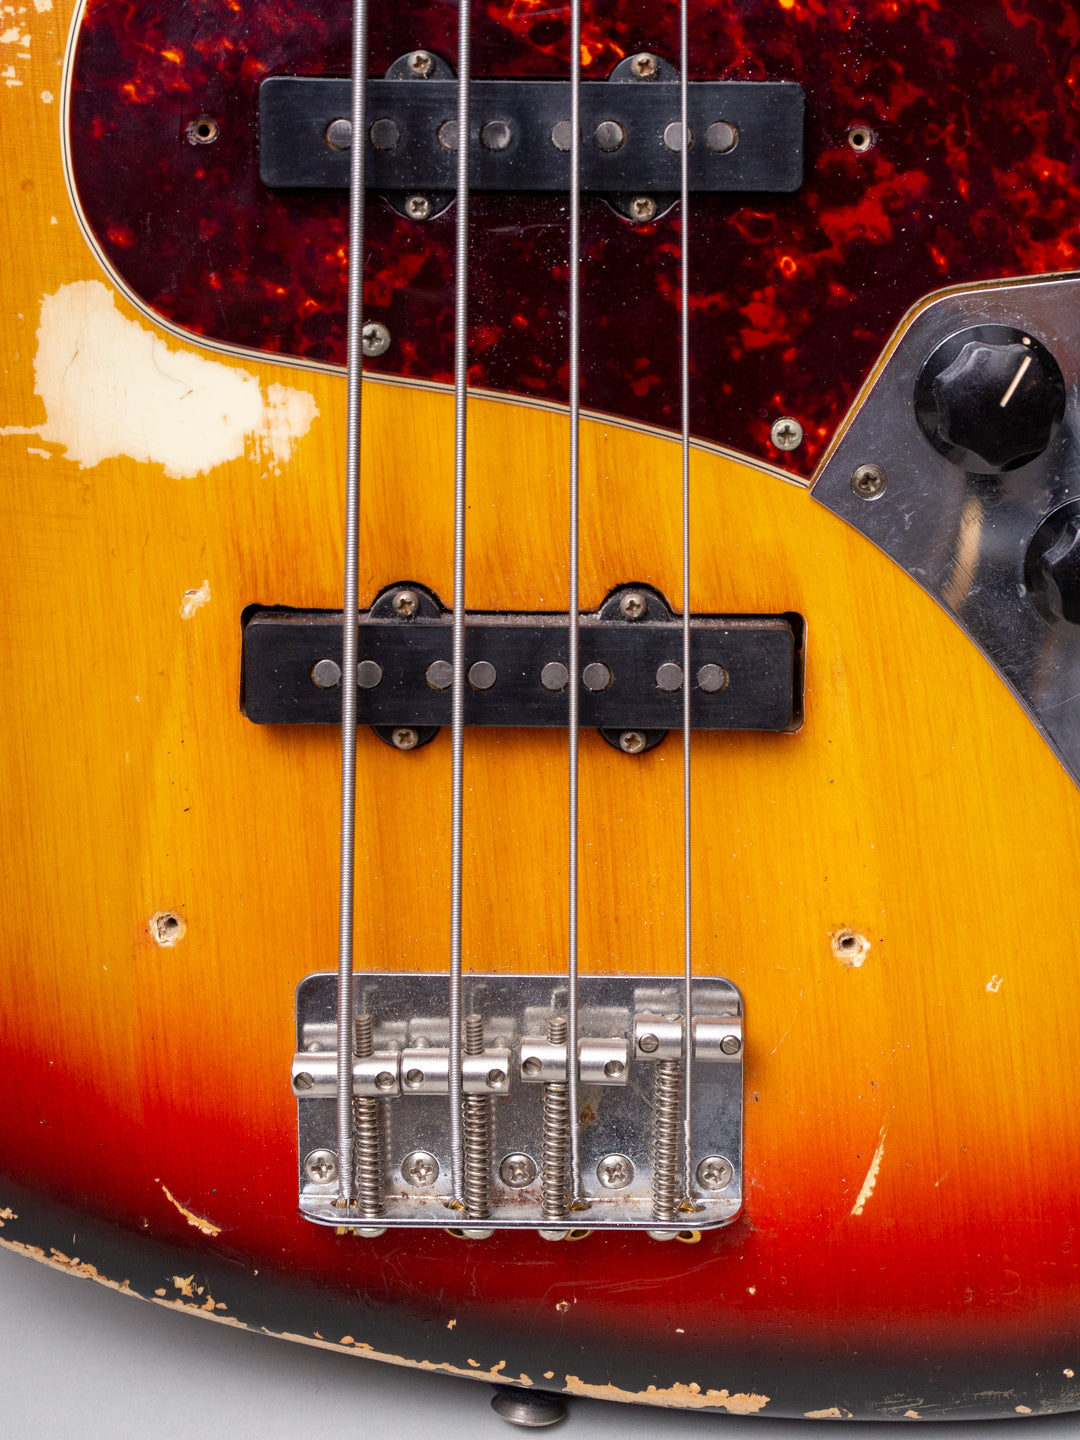 1969 Fender Jazz Bass